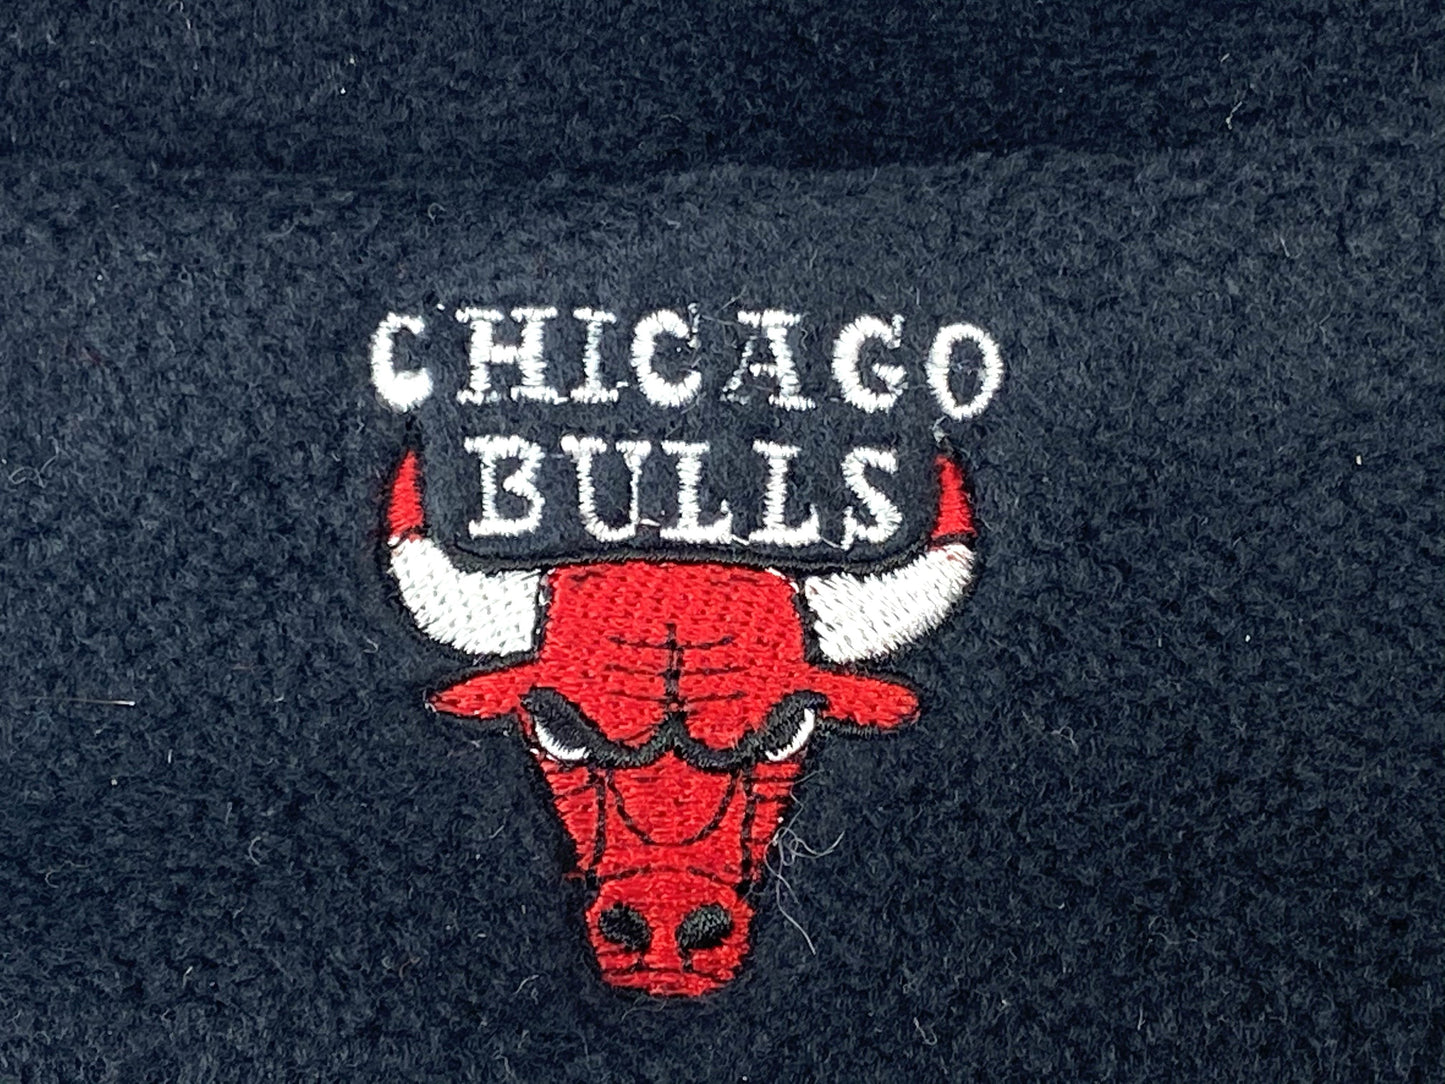 Chicago Bulls Vintage NBA Cuffed Black Fleece Hat by Drew Pearson Marketing